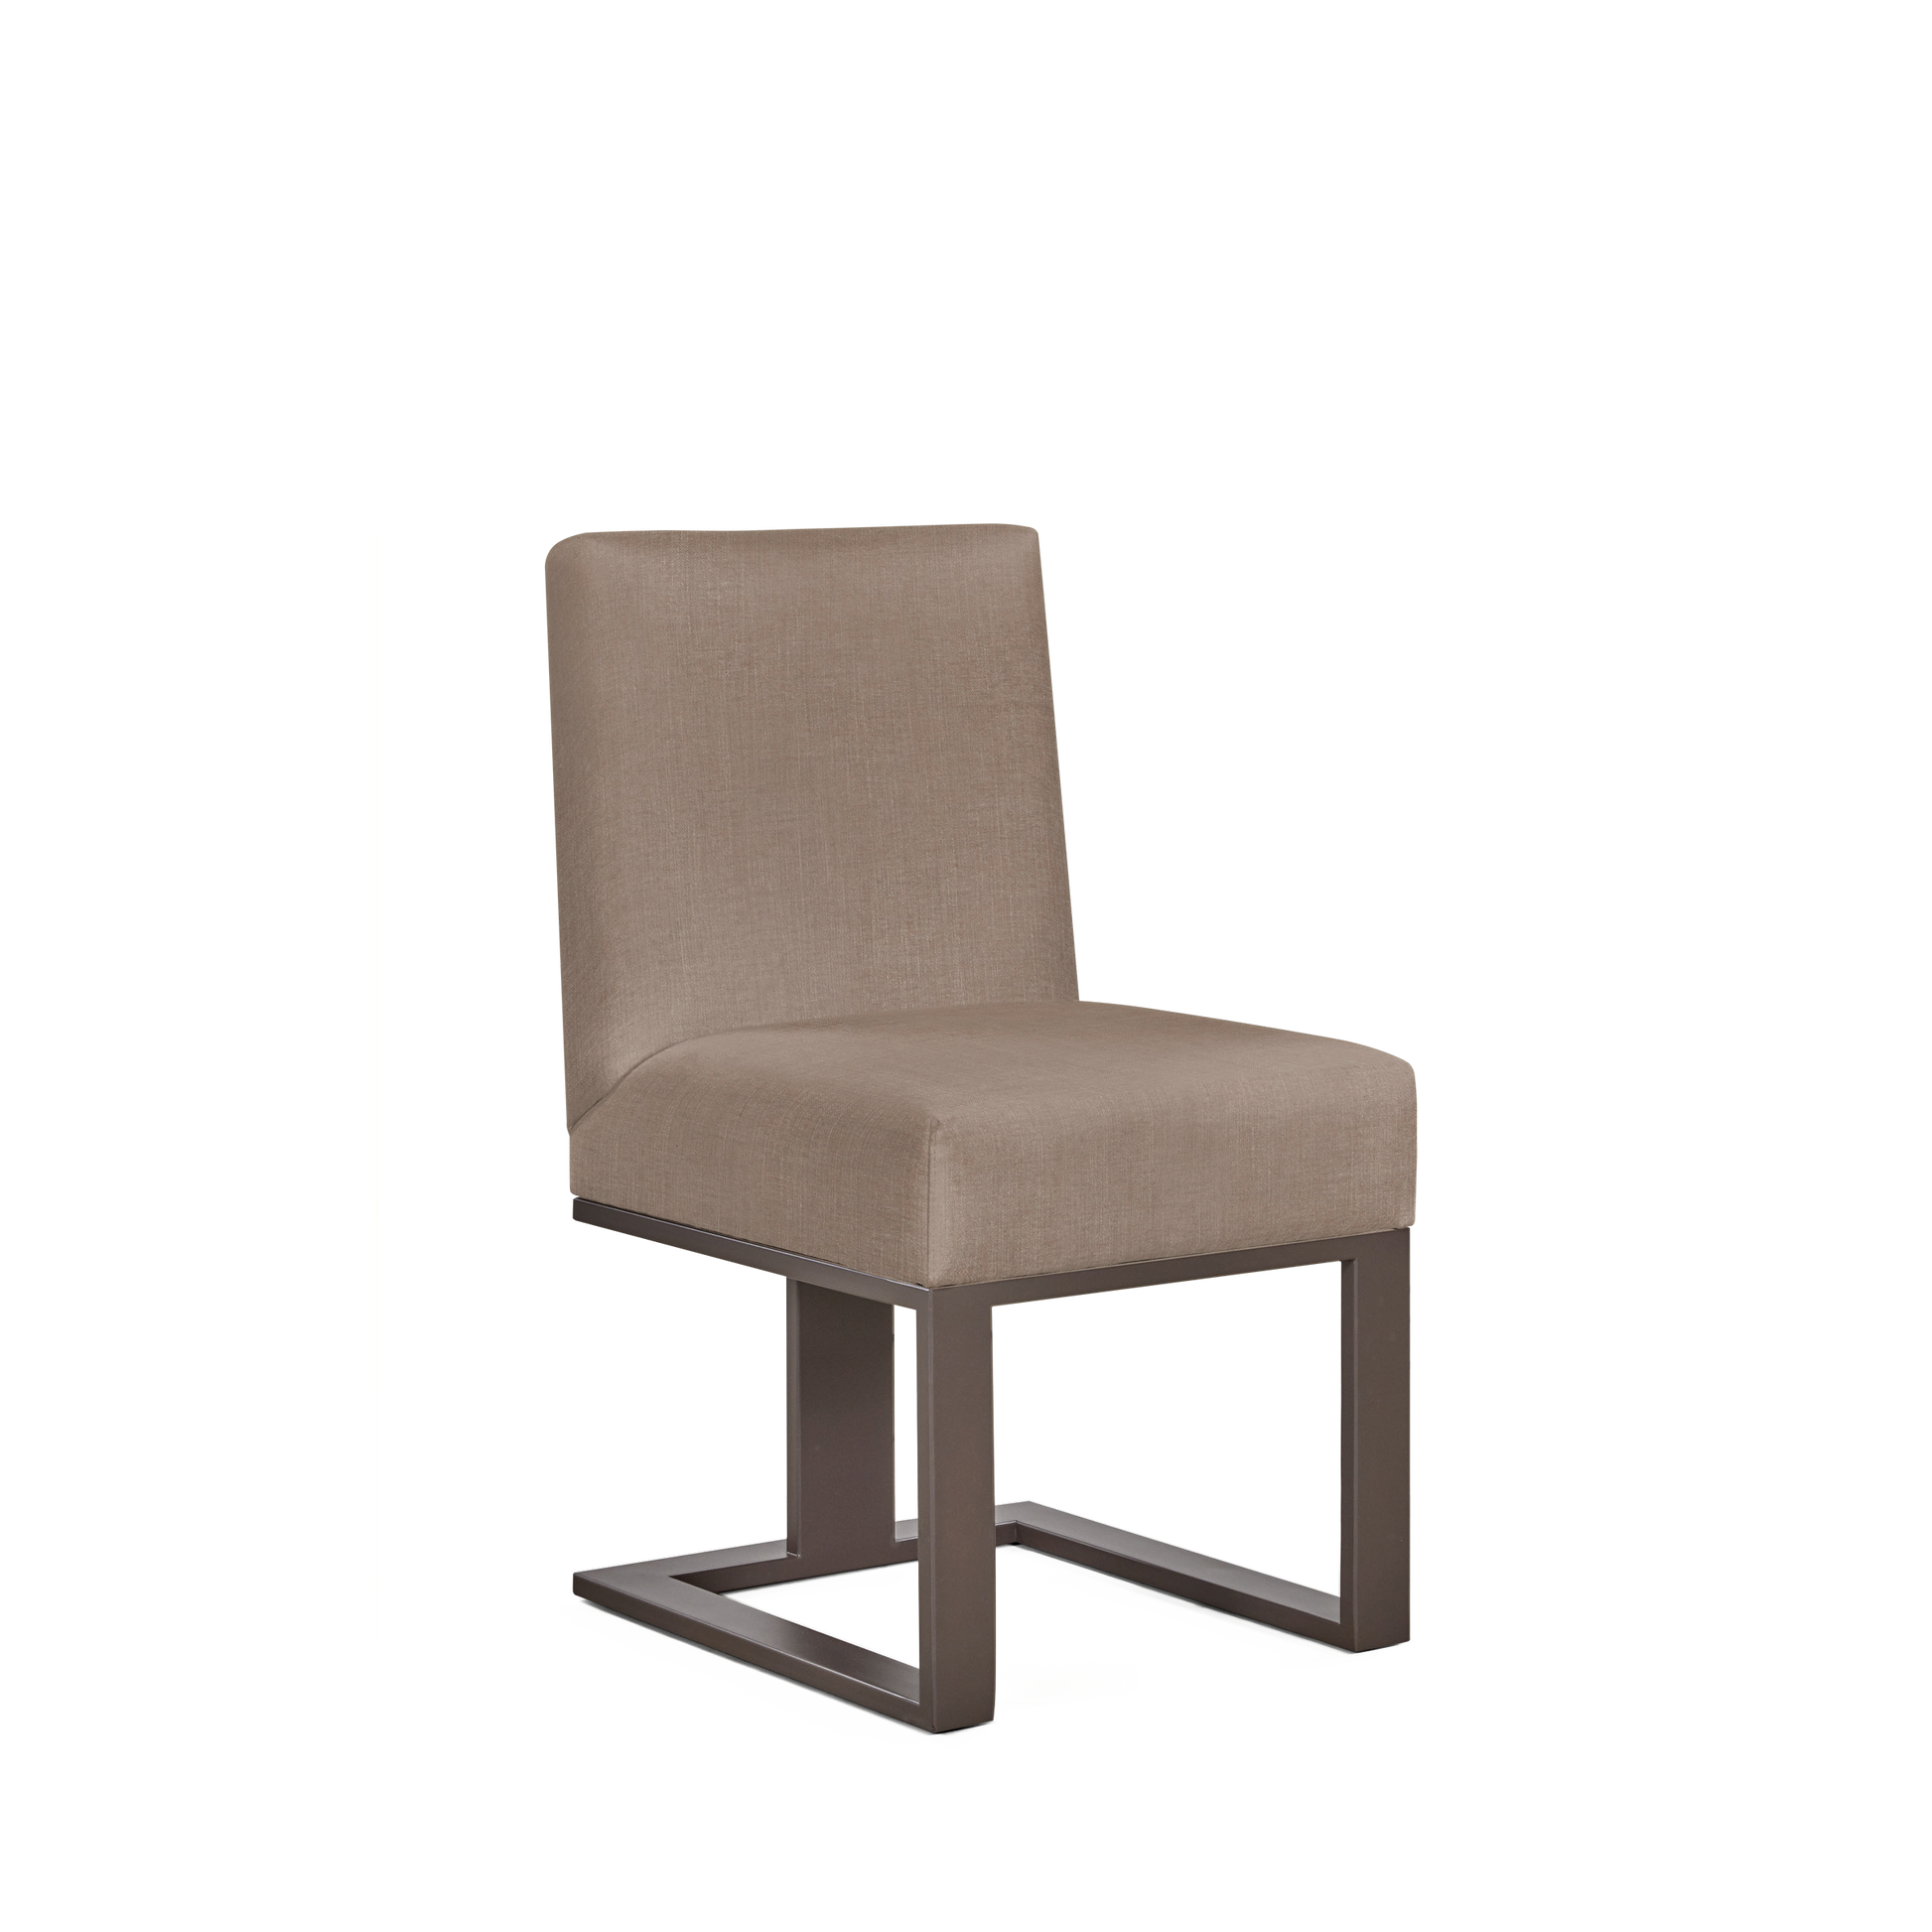 Len chair with linara light brown textile and moka wood legs 